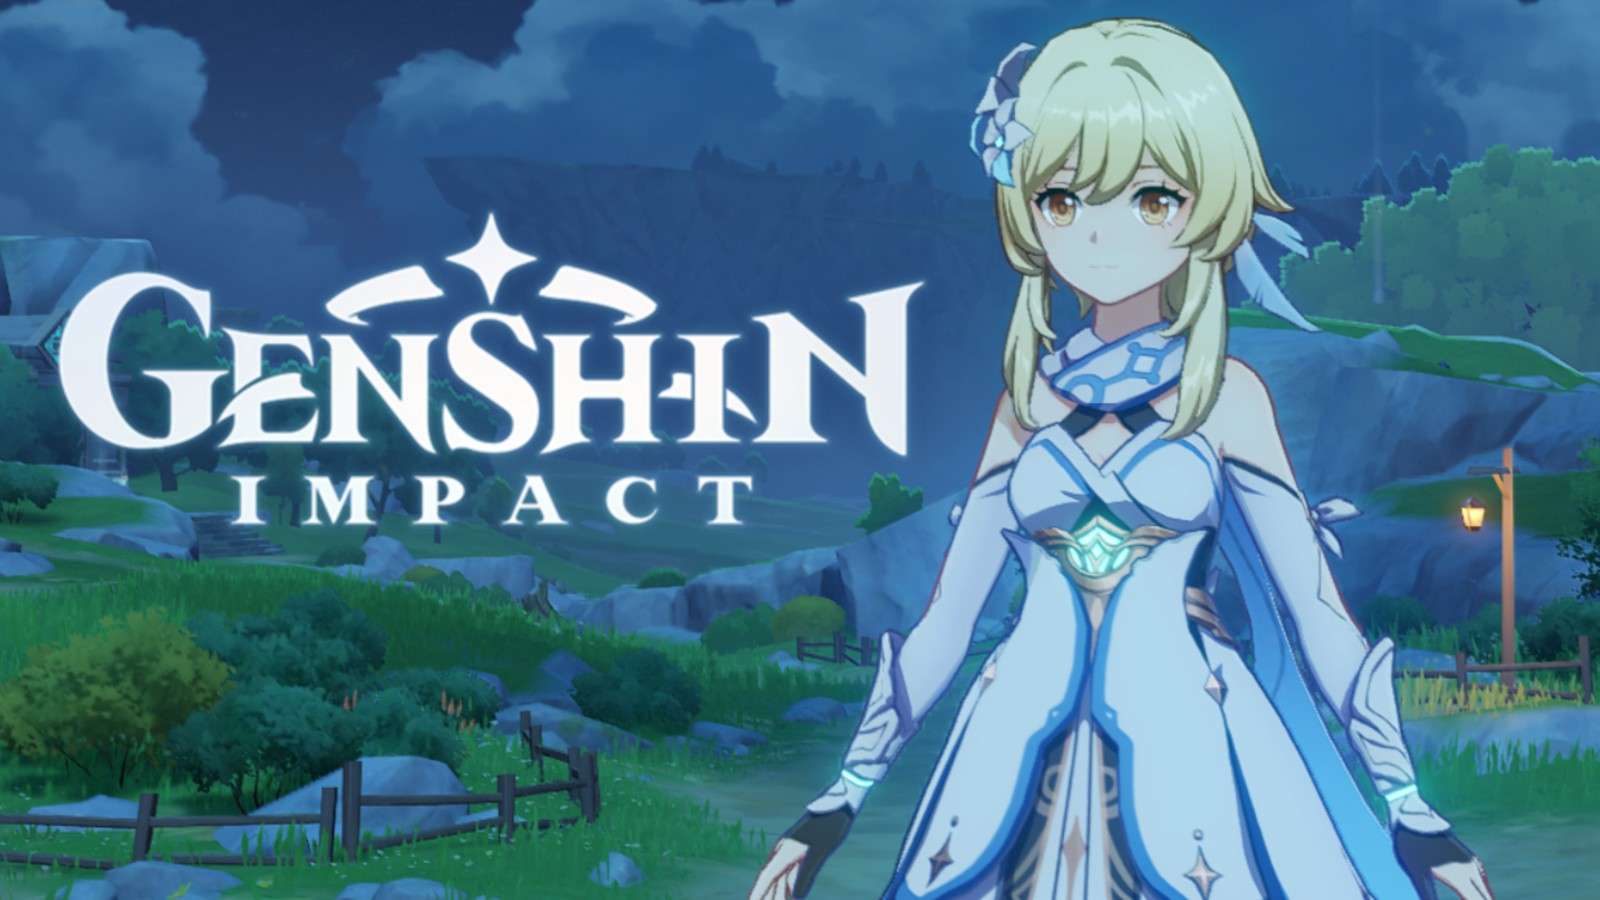 Genshin Impact character by the logo